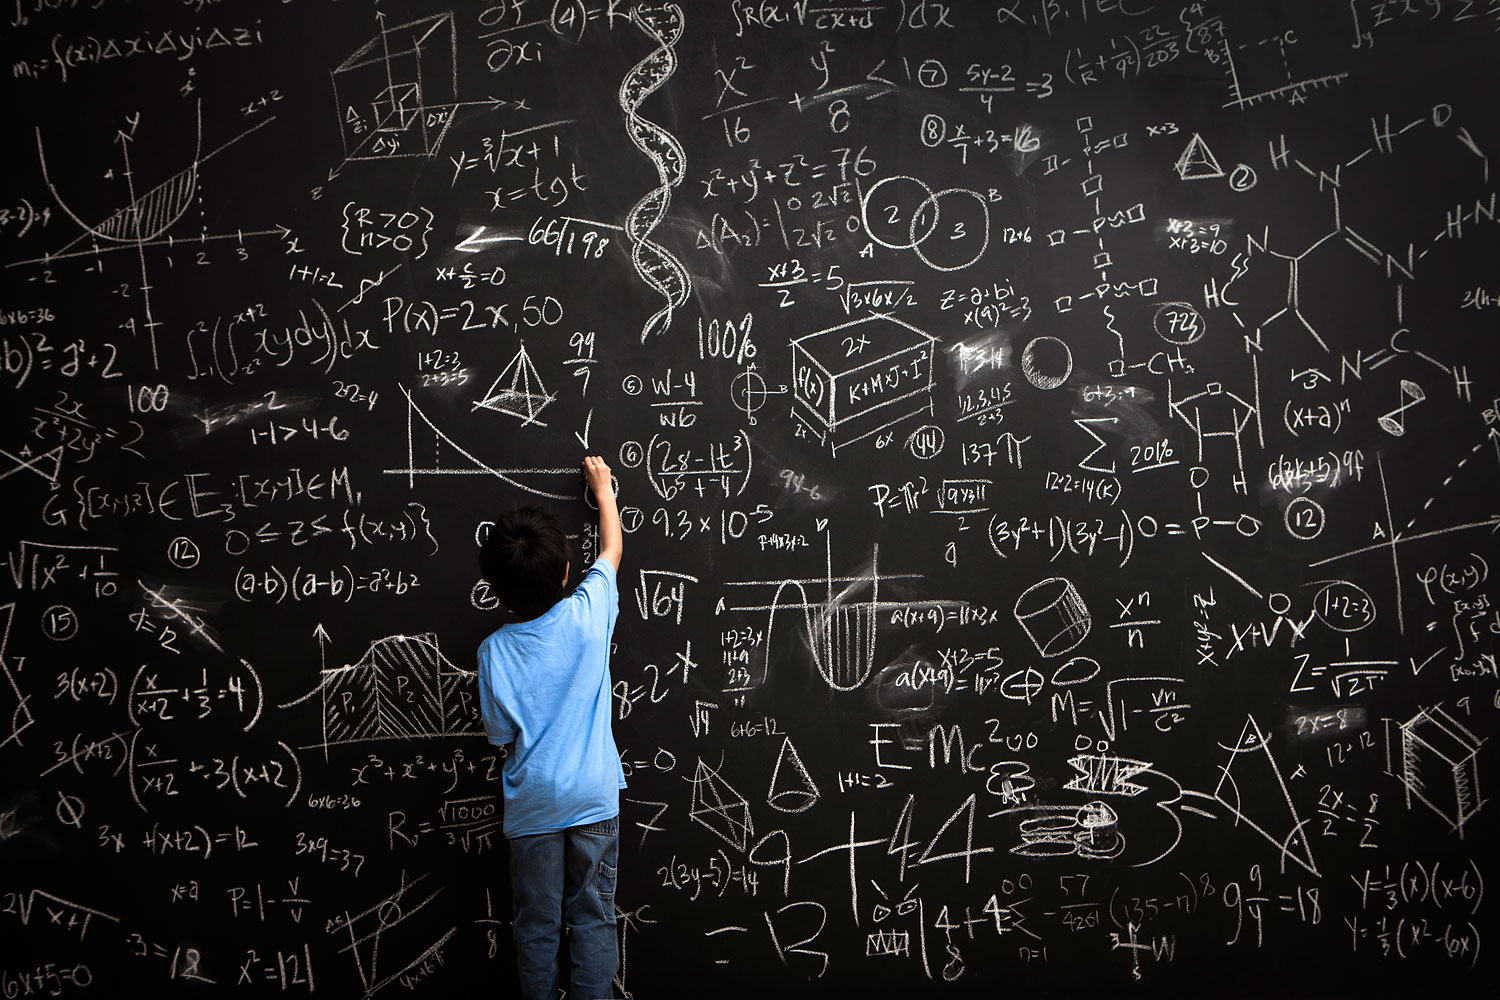 Young boy writes math equations on chalkboard